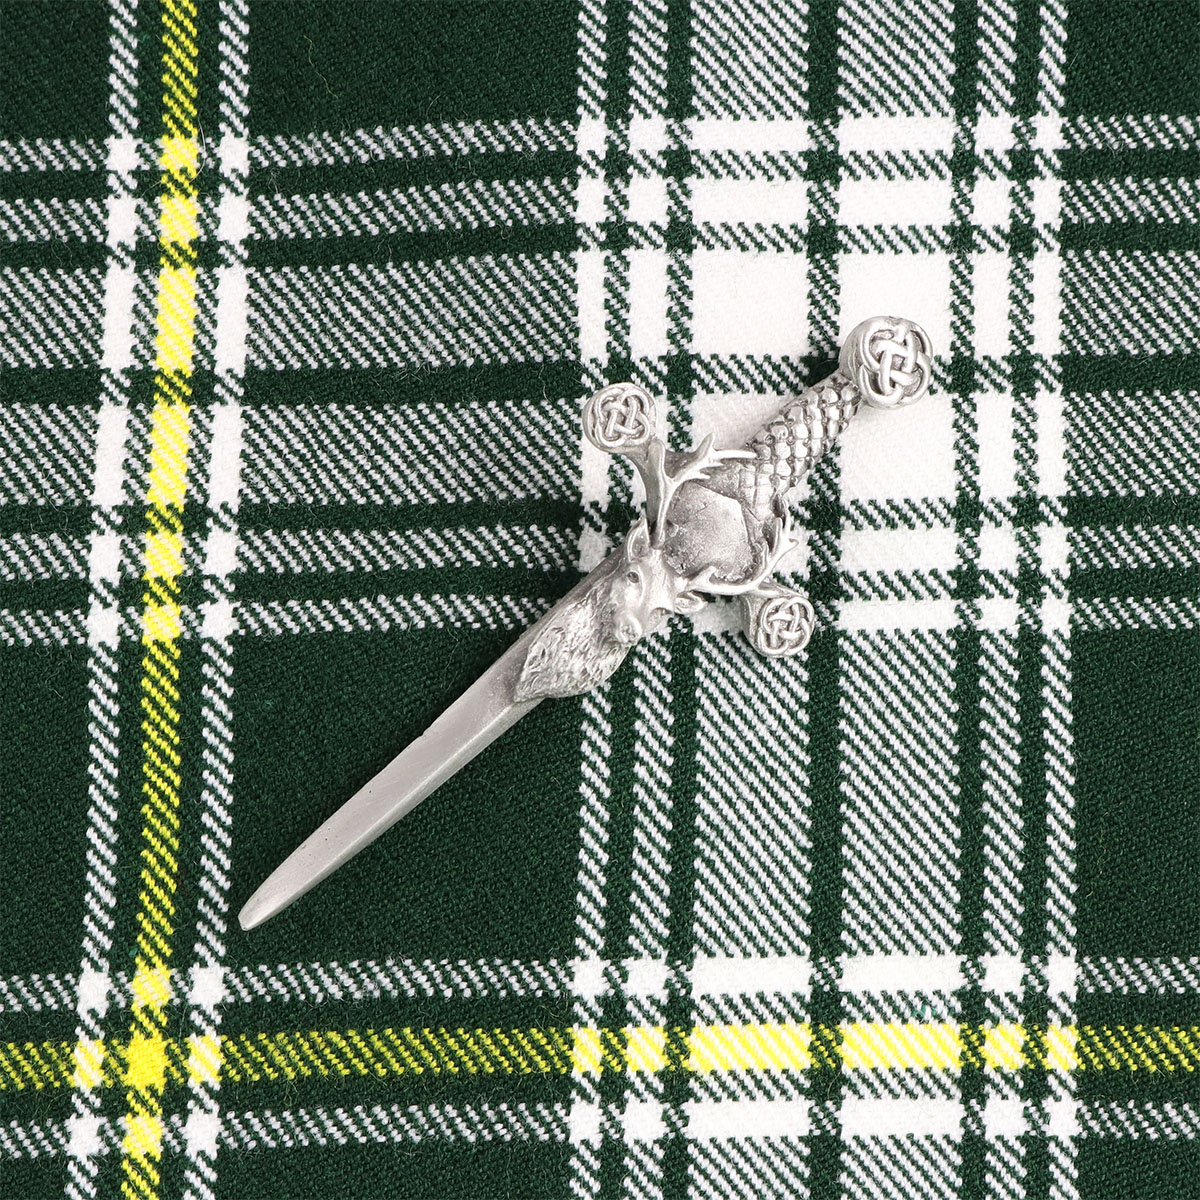 The Celtic Croft Stag's Head Kilt Pin